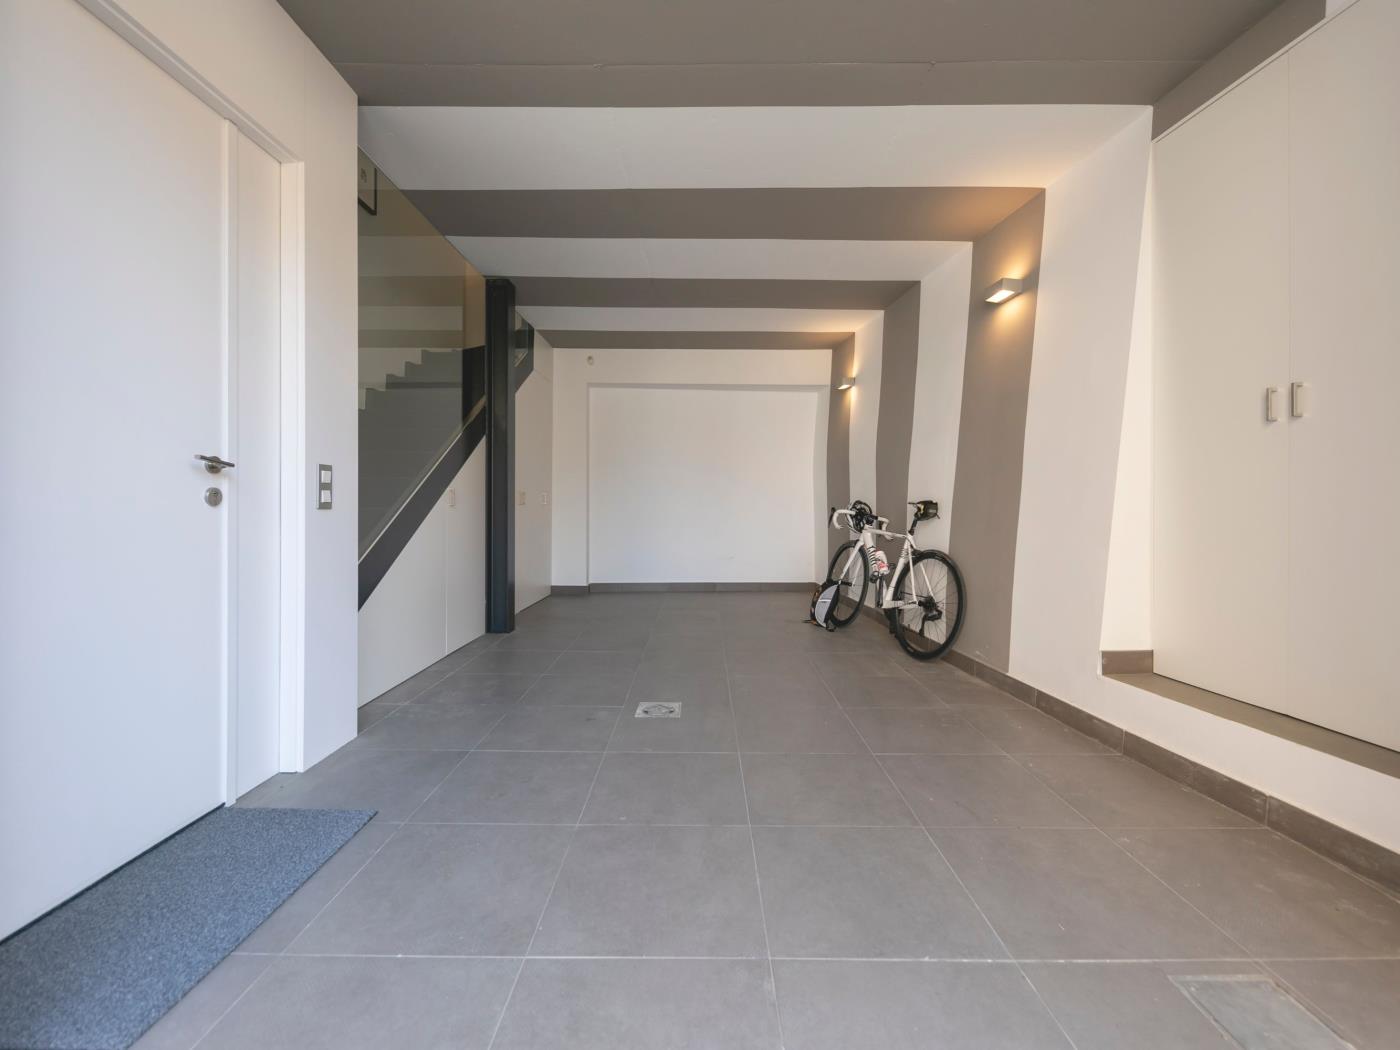 Bravissimo Portal Nou, with private garage in Girona